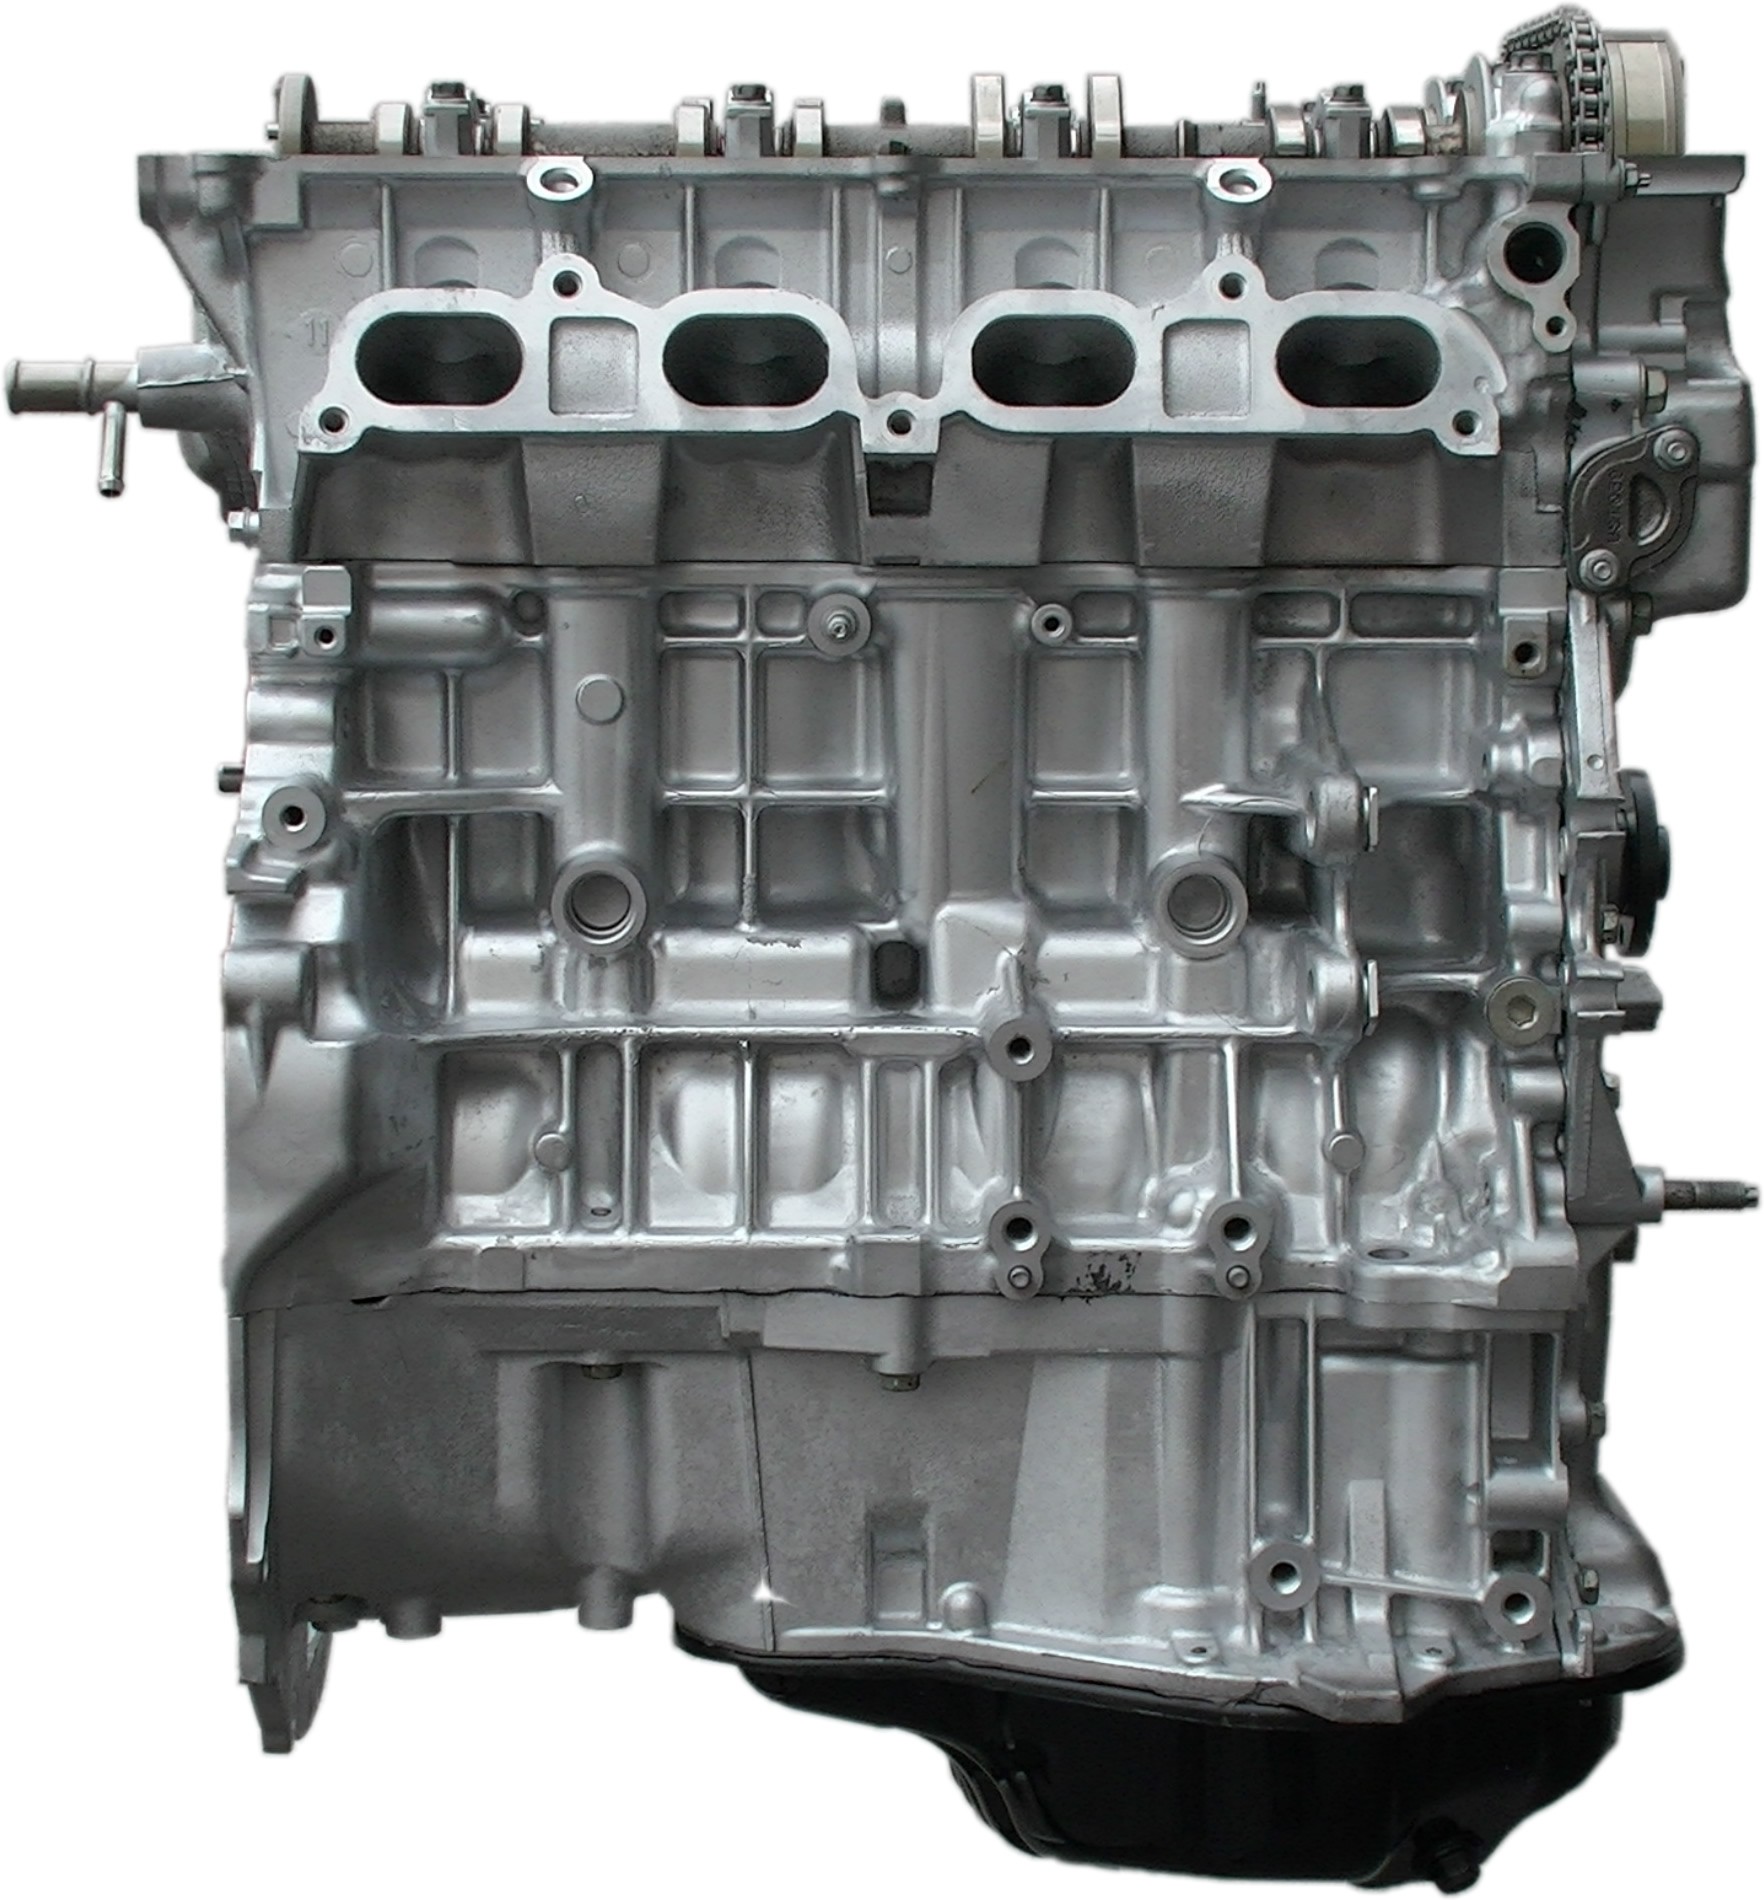 Rebuilt 0406 Toyota Rav4 4Cyl. 2.4L 2AZFE Engine « Kar